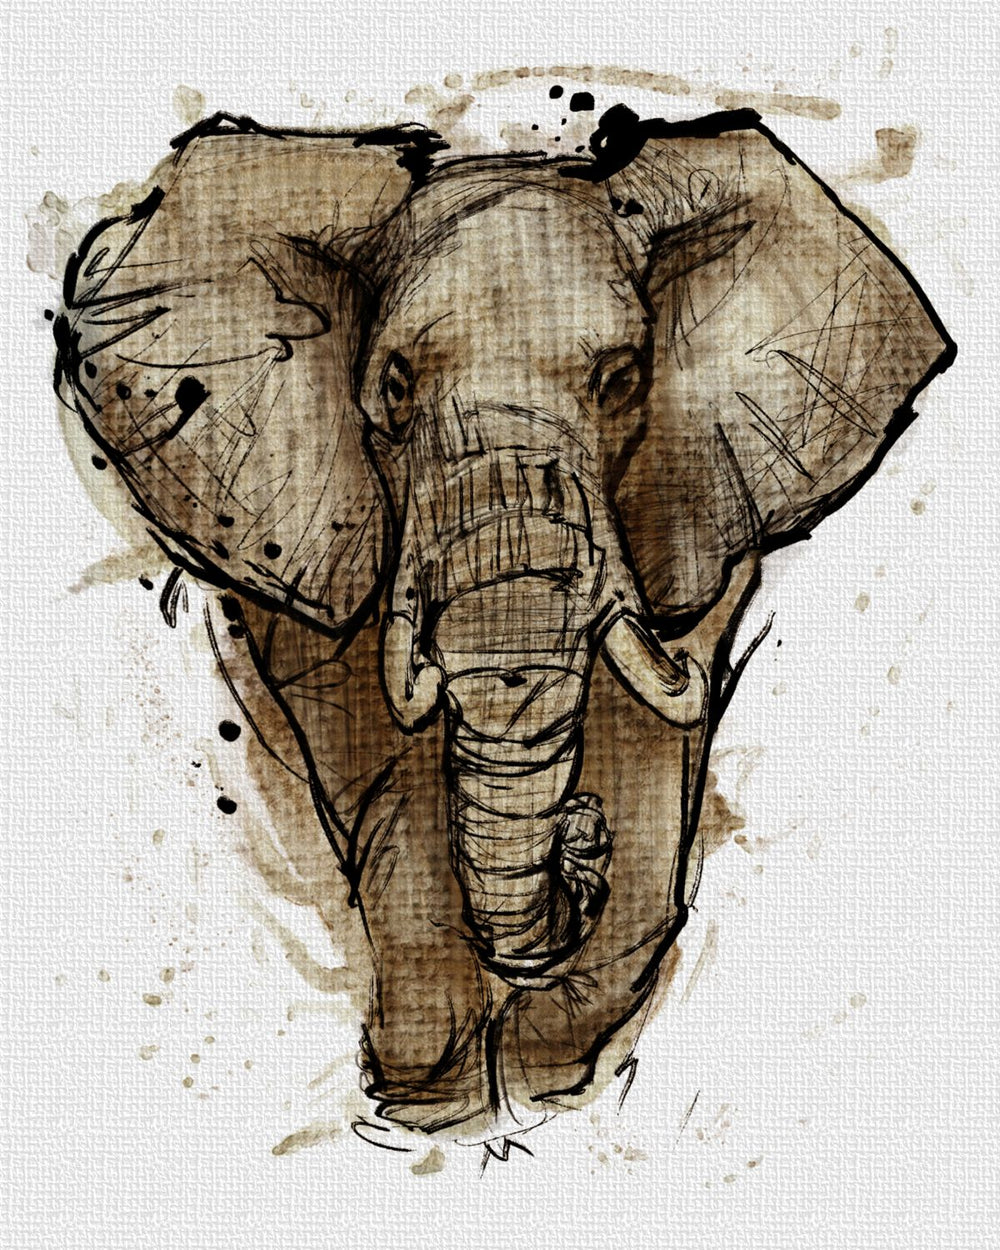 Walking African Elephant